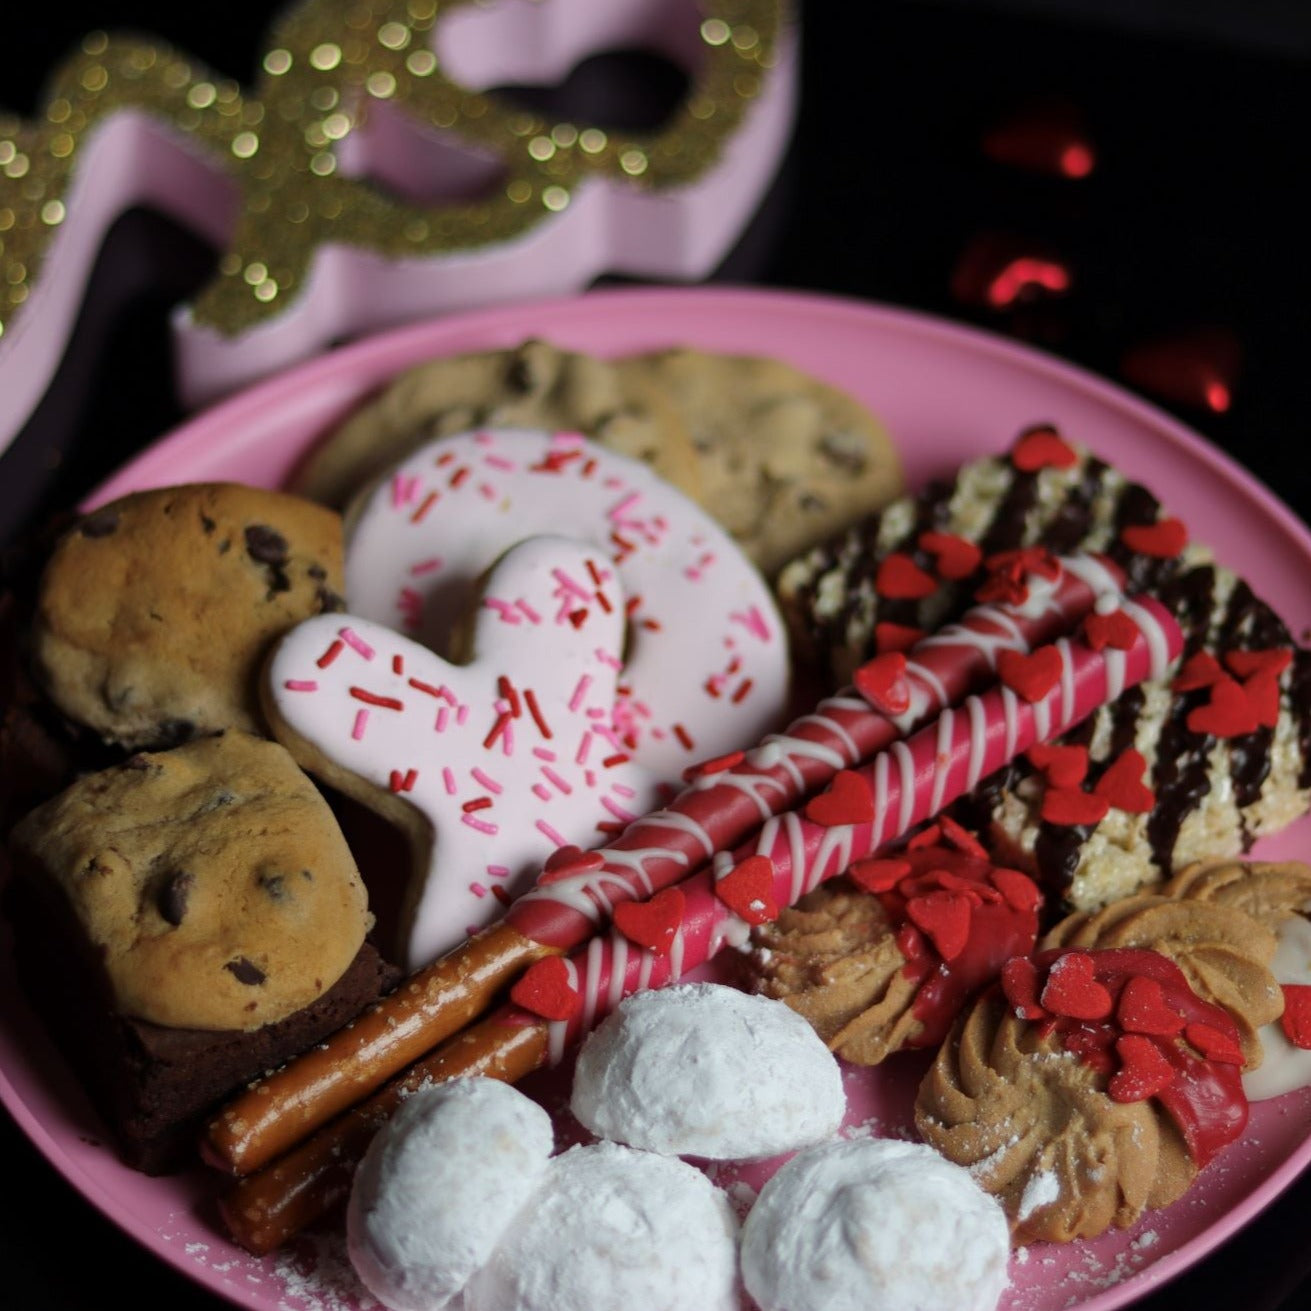 dessert charcuterie board, lovers plate, serves 2, valentines for girlfriend